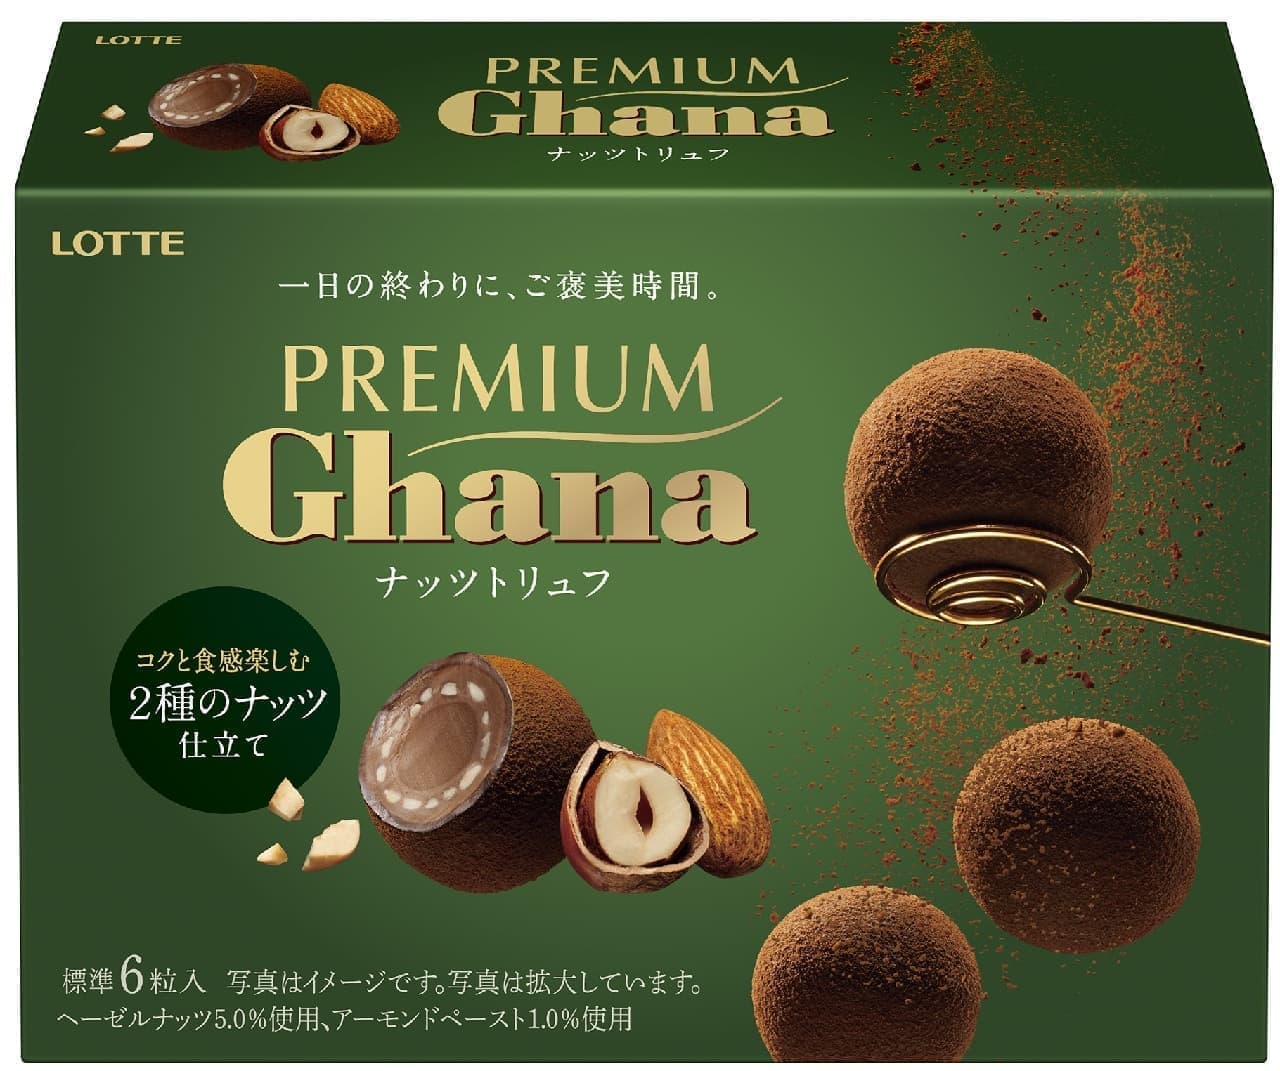 Lotte "Premium Ghana Nut Truffle